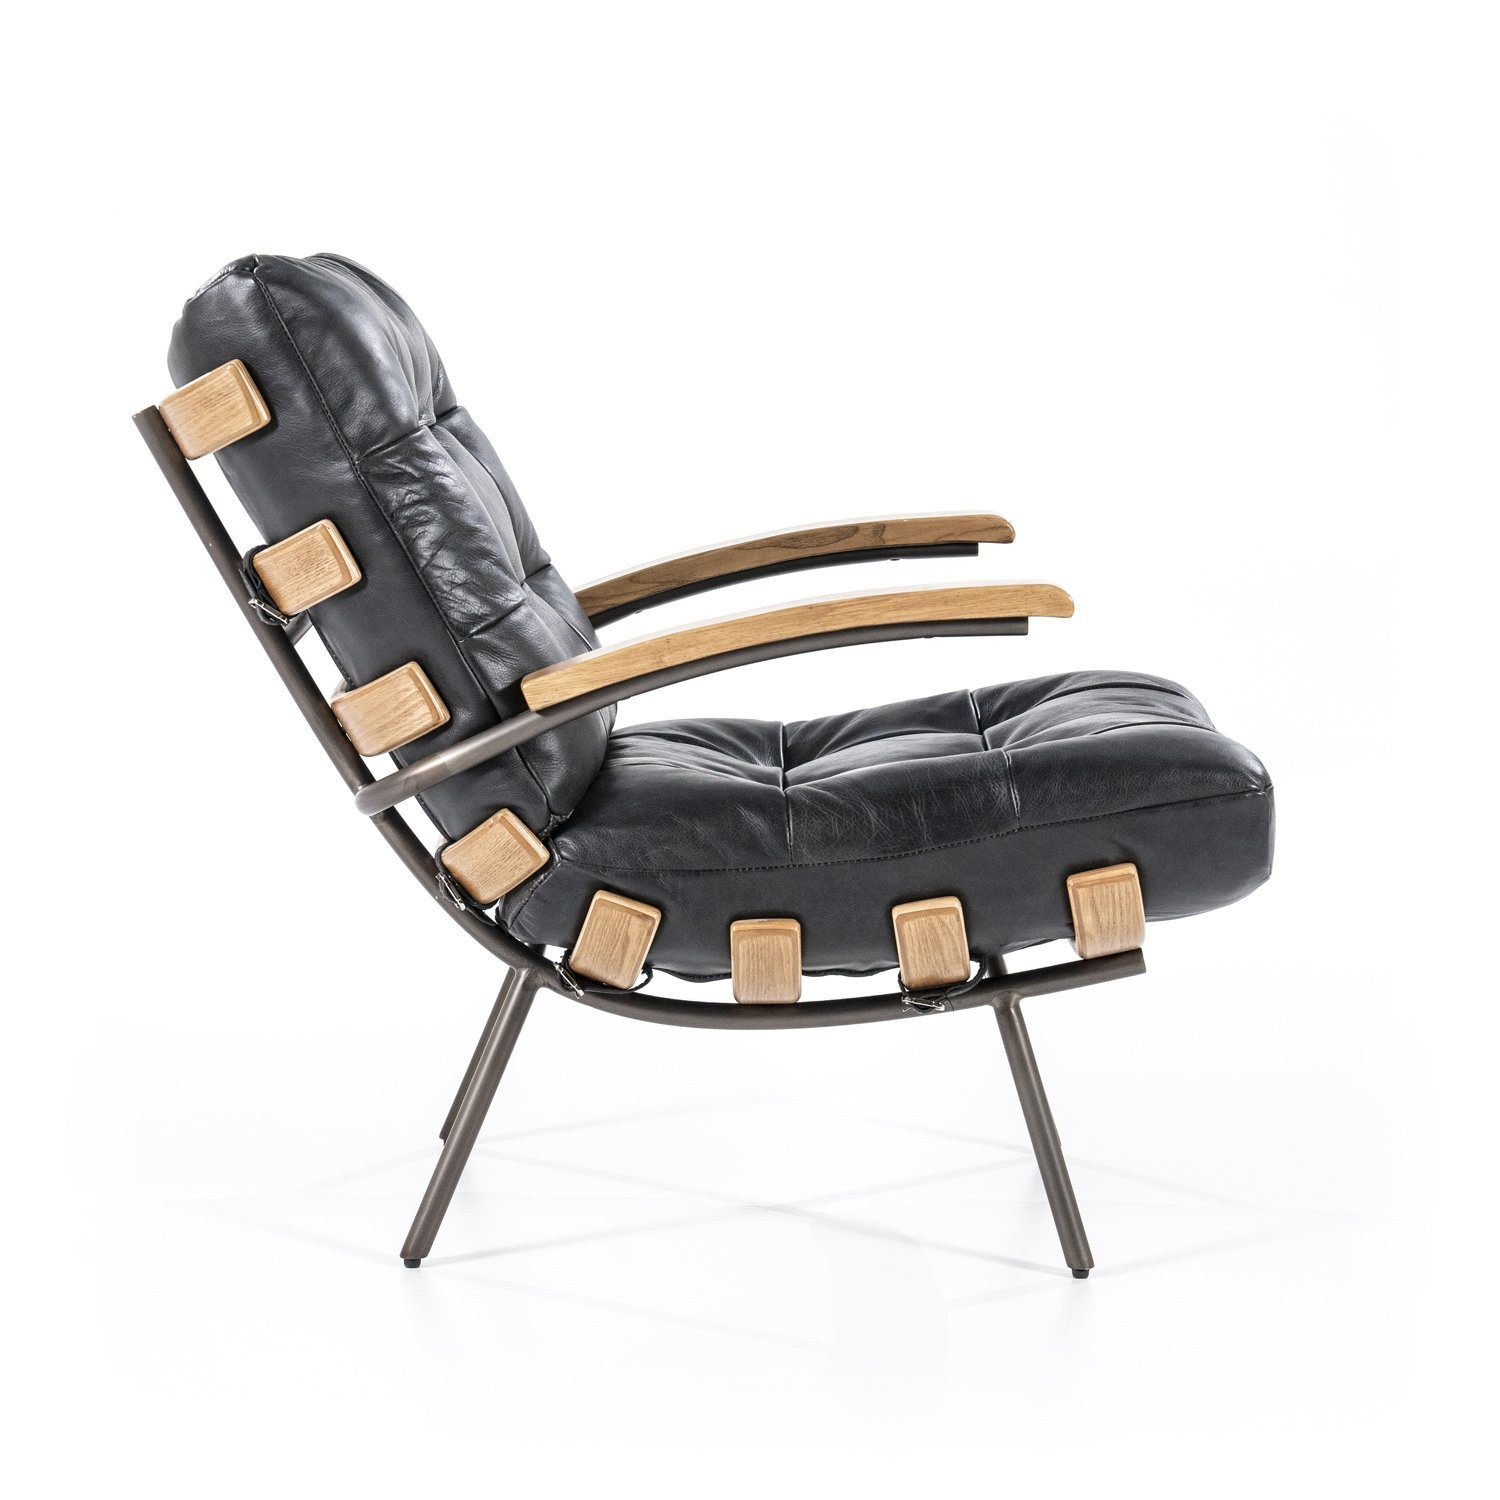 Maison ESTO schwarz Sessel Leder Vintage, Java-Leder aus hochwertigem Ledersessel Loungesessel NICOLAS